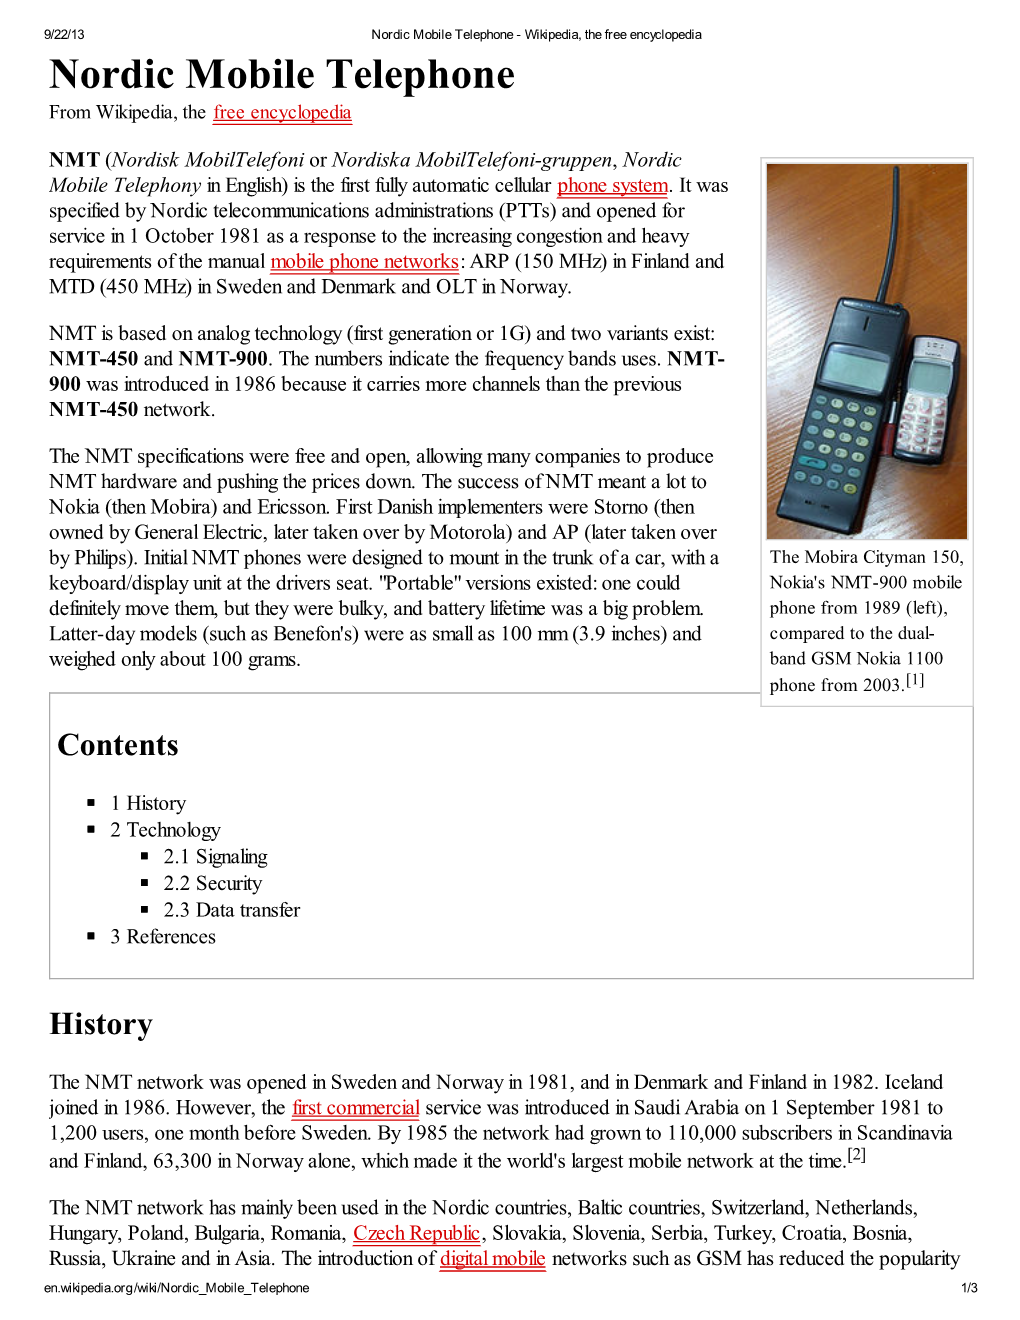 Nordic Mobile Telephone - Wikipedia, the Free Encyclopedia Nordic Mobile Telephone from Wikipedia, the Free Encyclopedia